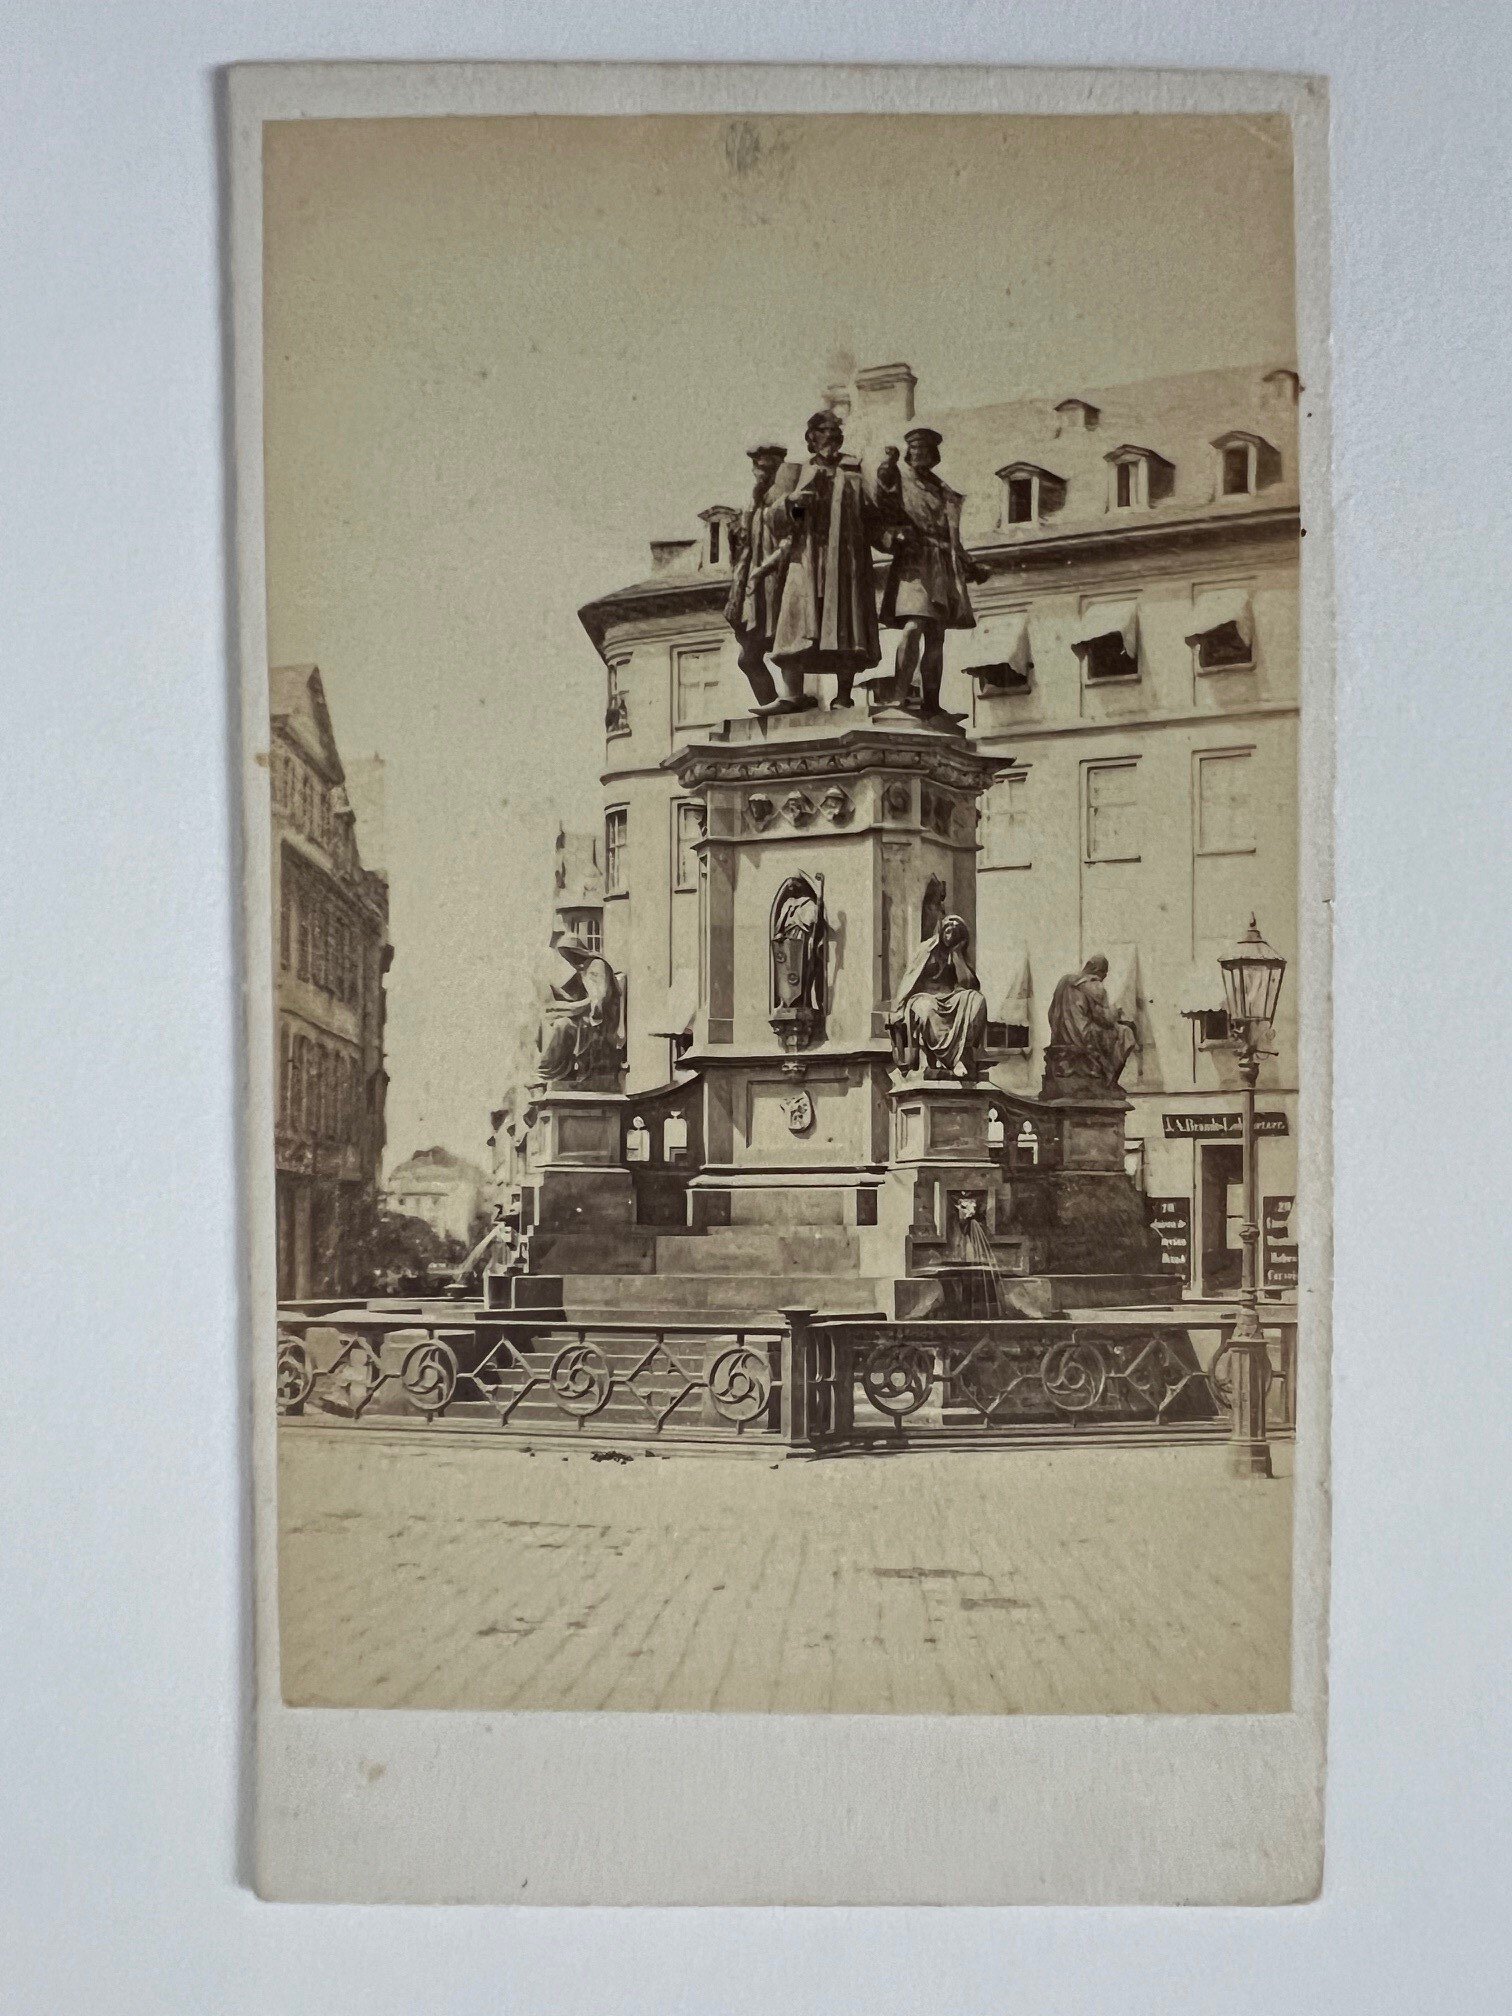 CdV, Theodor Creifelds, Frankfurt, Guttenberg-Denkmal, ca. 1870. (Taunus-Rhein-Main - Regionalgeschichtliche Sammlung Dr. Stefan Naas CC BY-NC-SA)